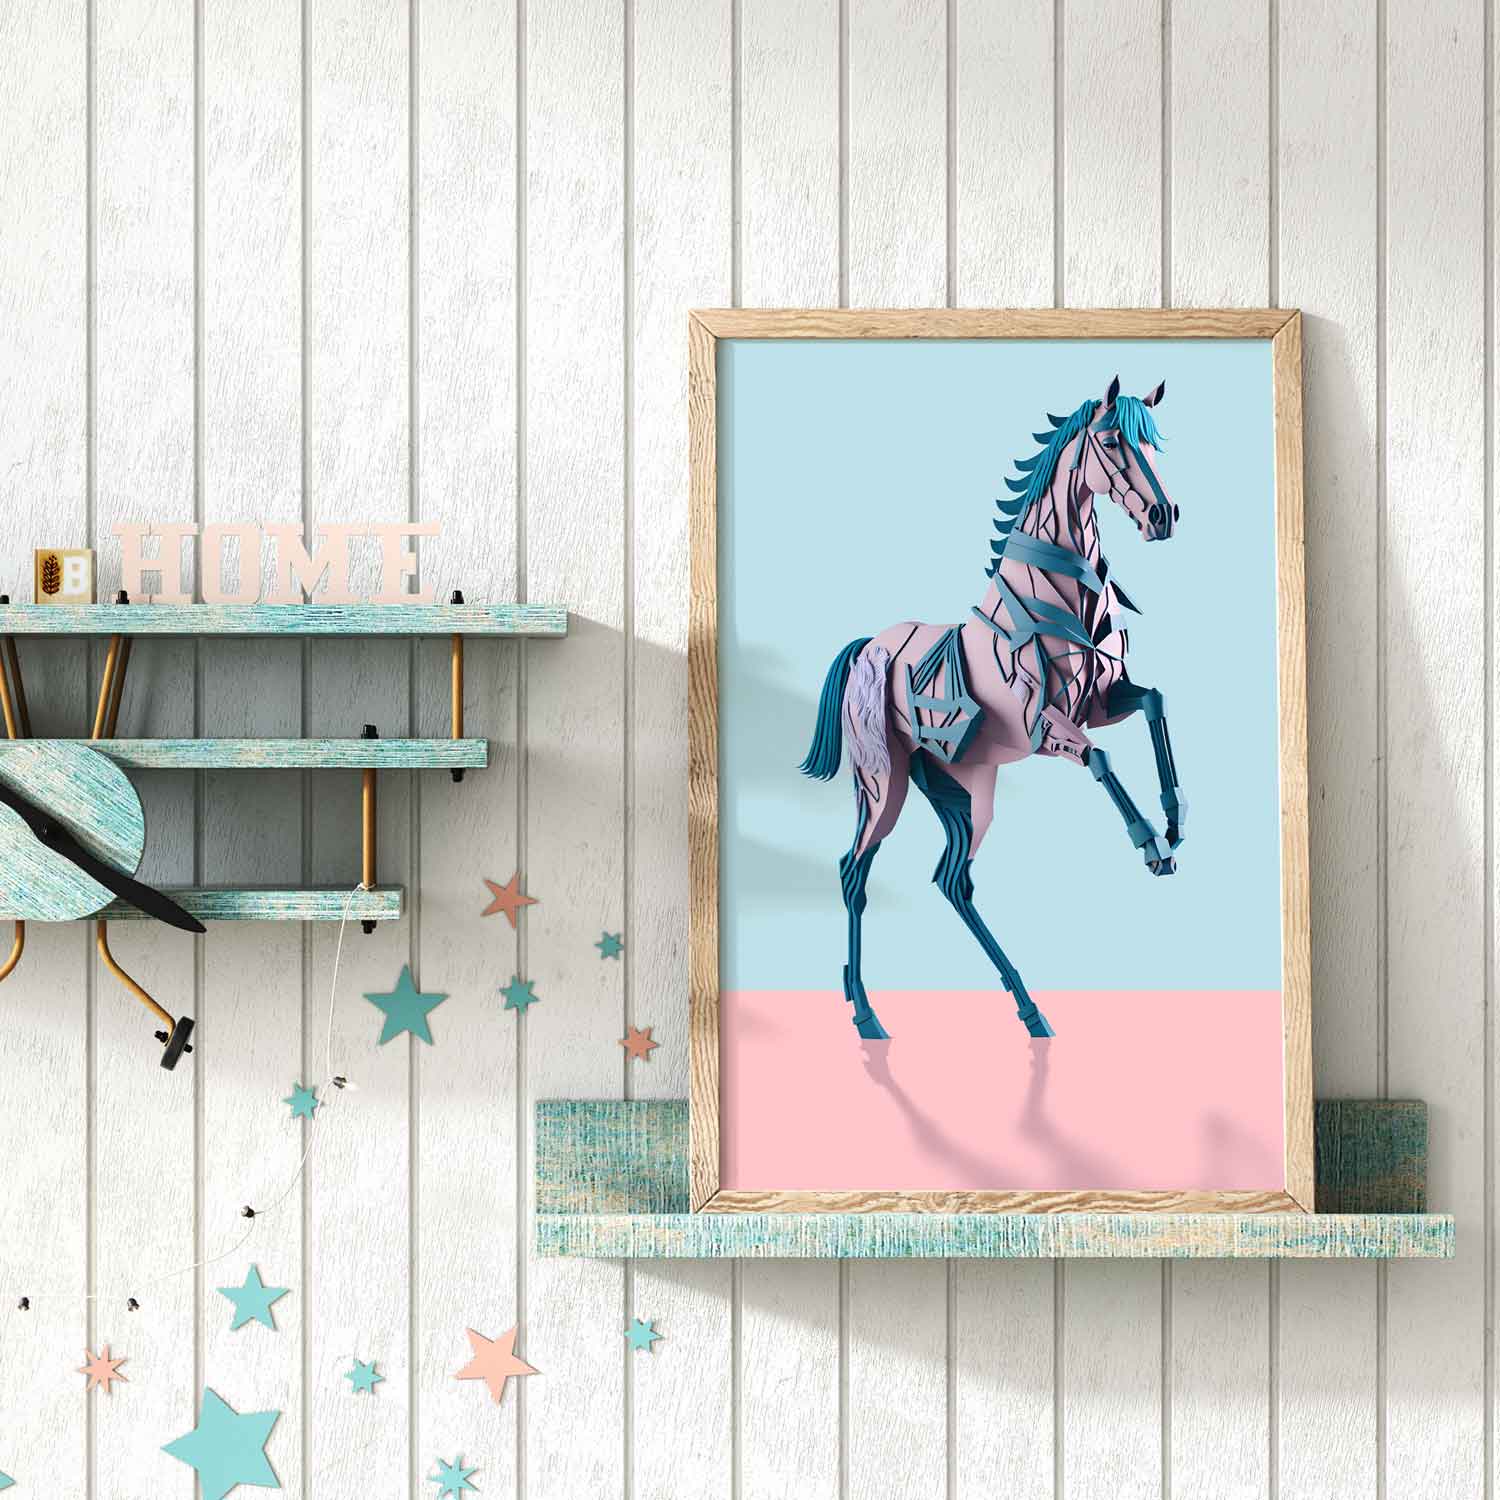 Neighing Horses - Wall Art Print Set of 3